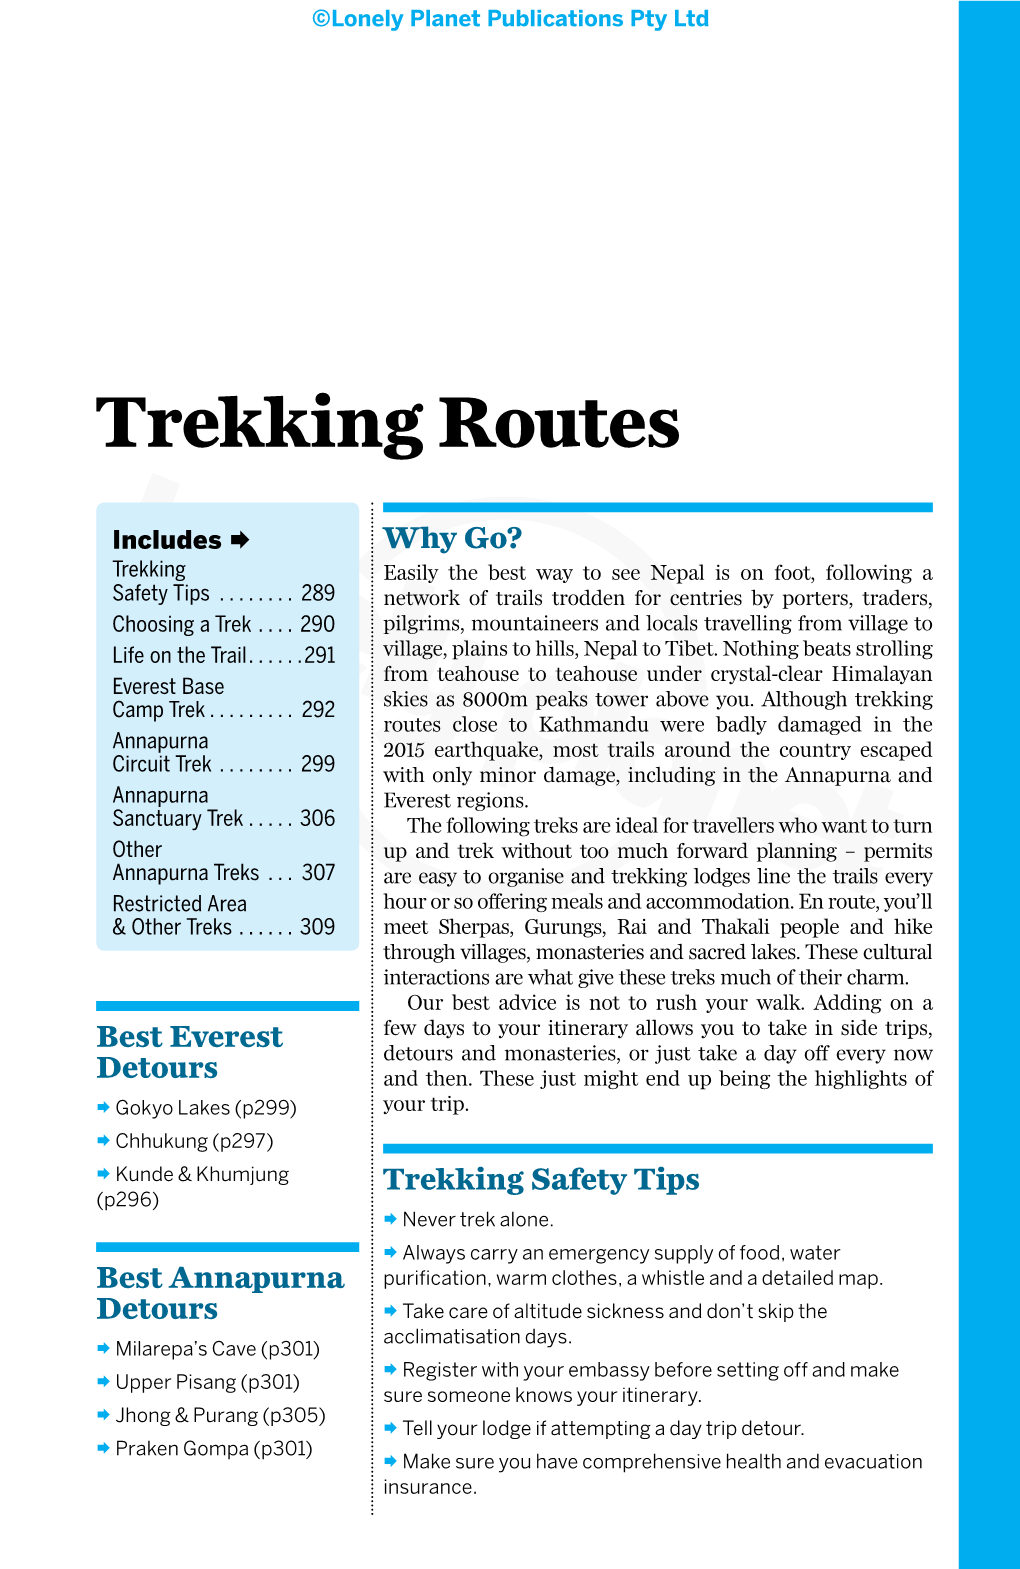 Trekking Routes